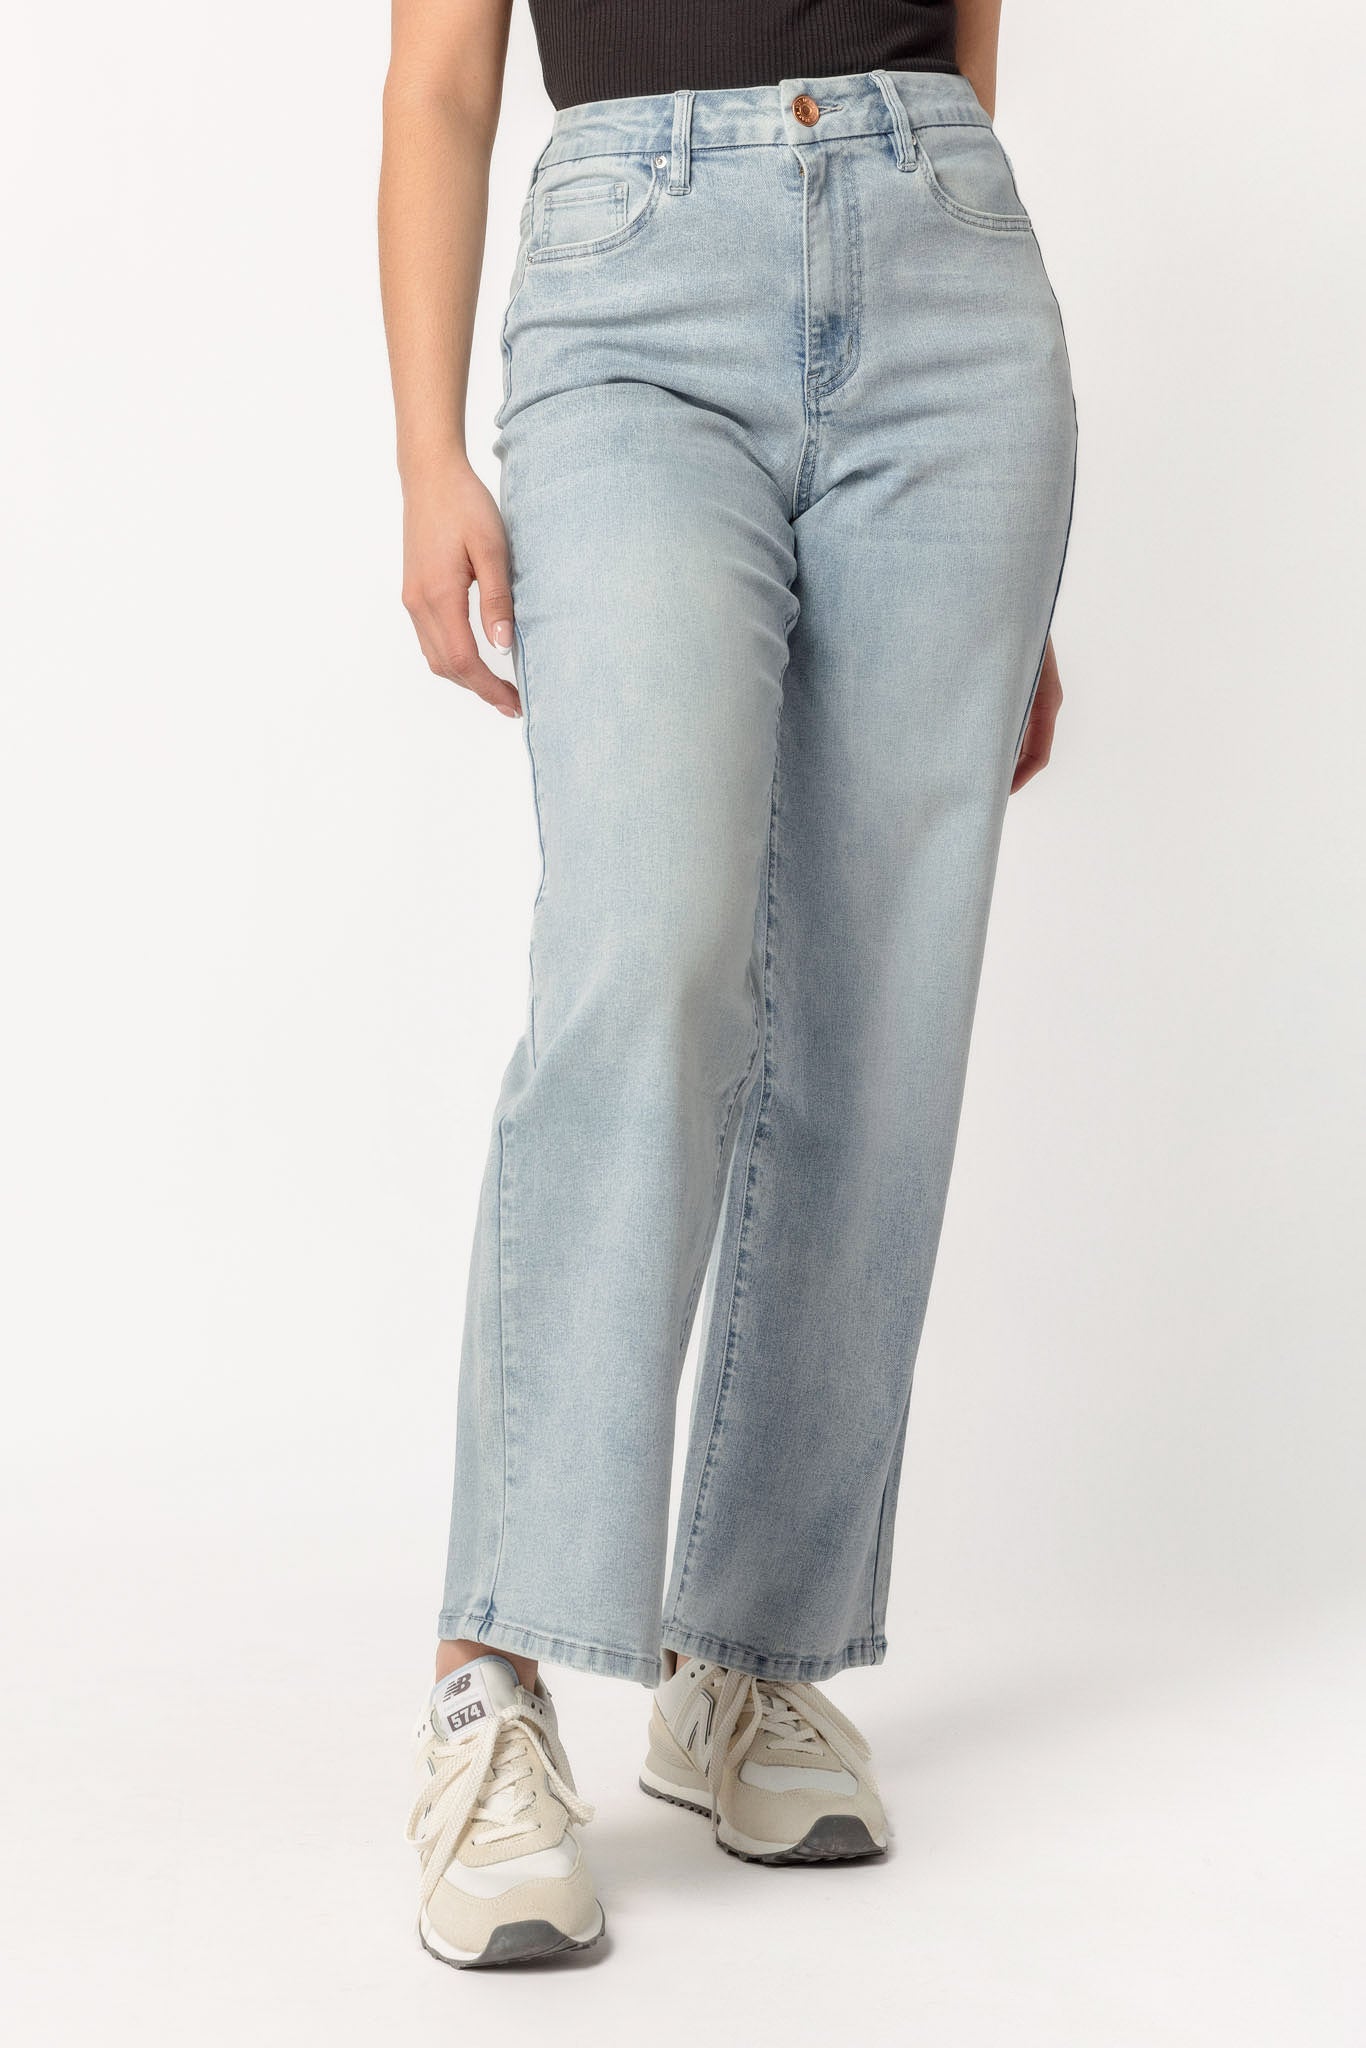 Sydney Sunshine High Rise Button Fly Distressed Skinny YMI Jeans (Ligh ·  NanaMacs